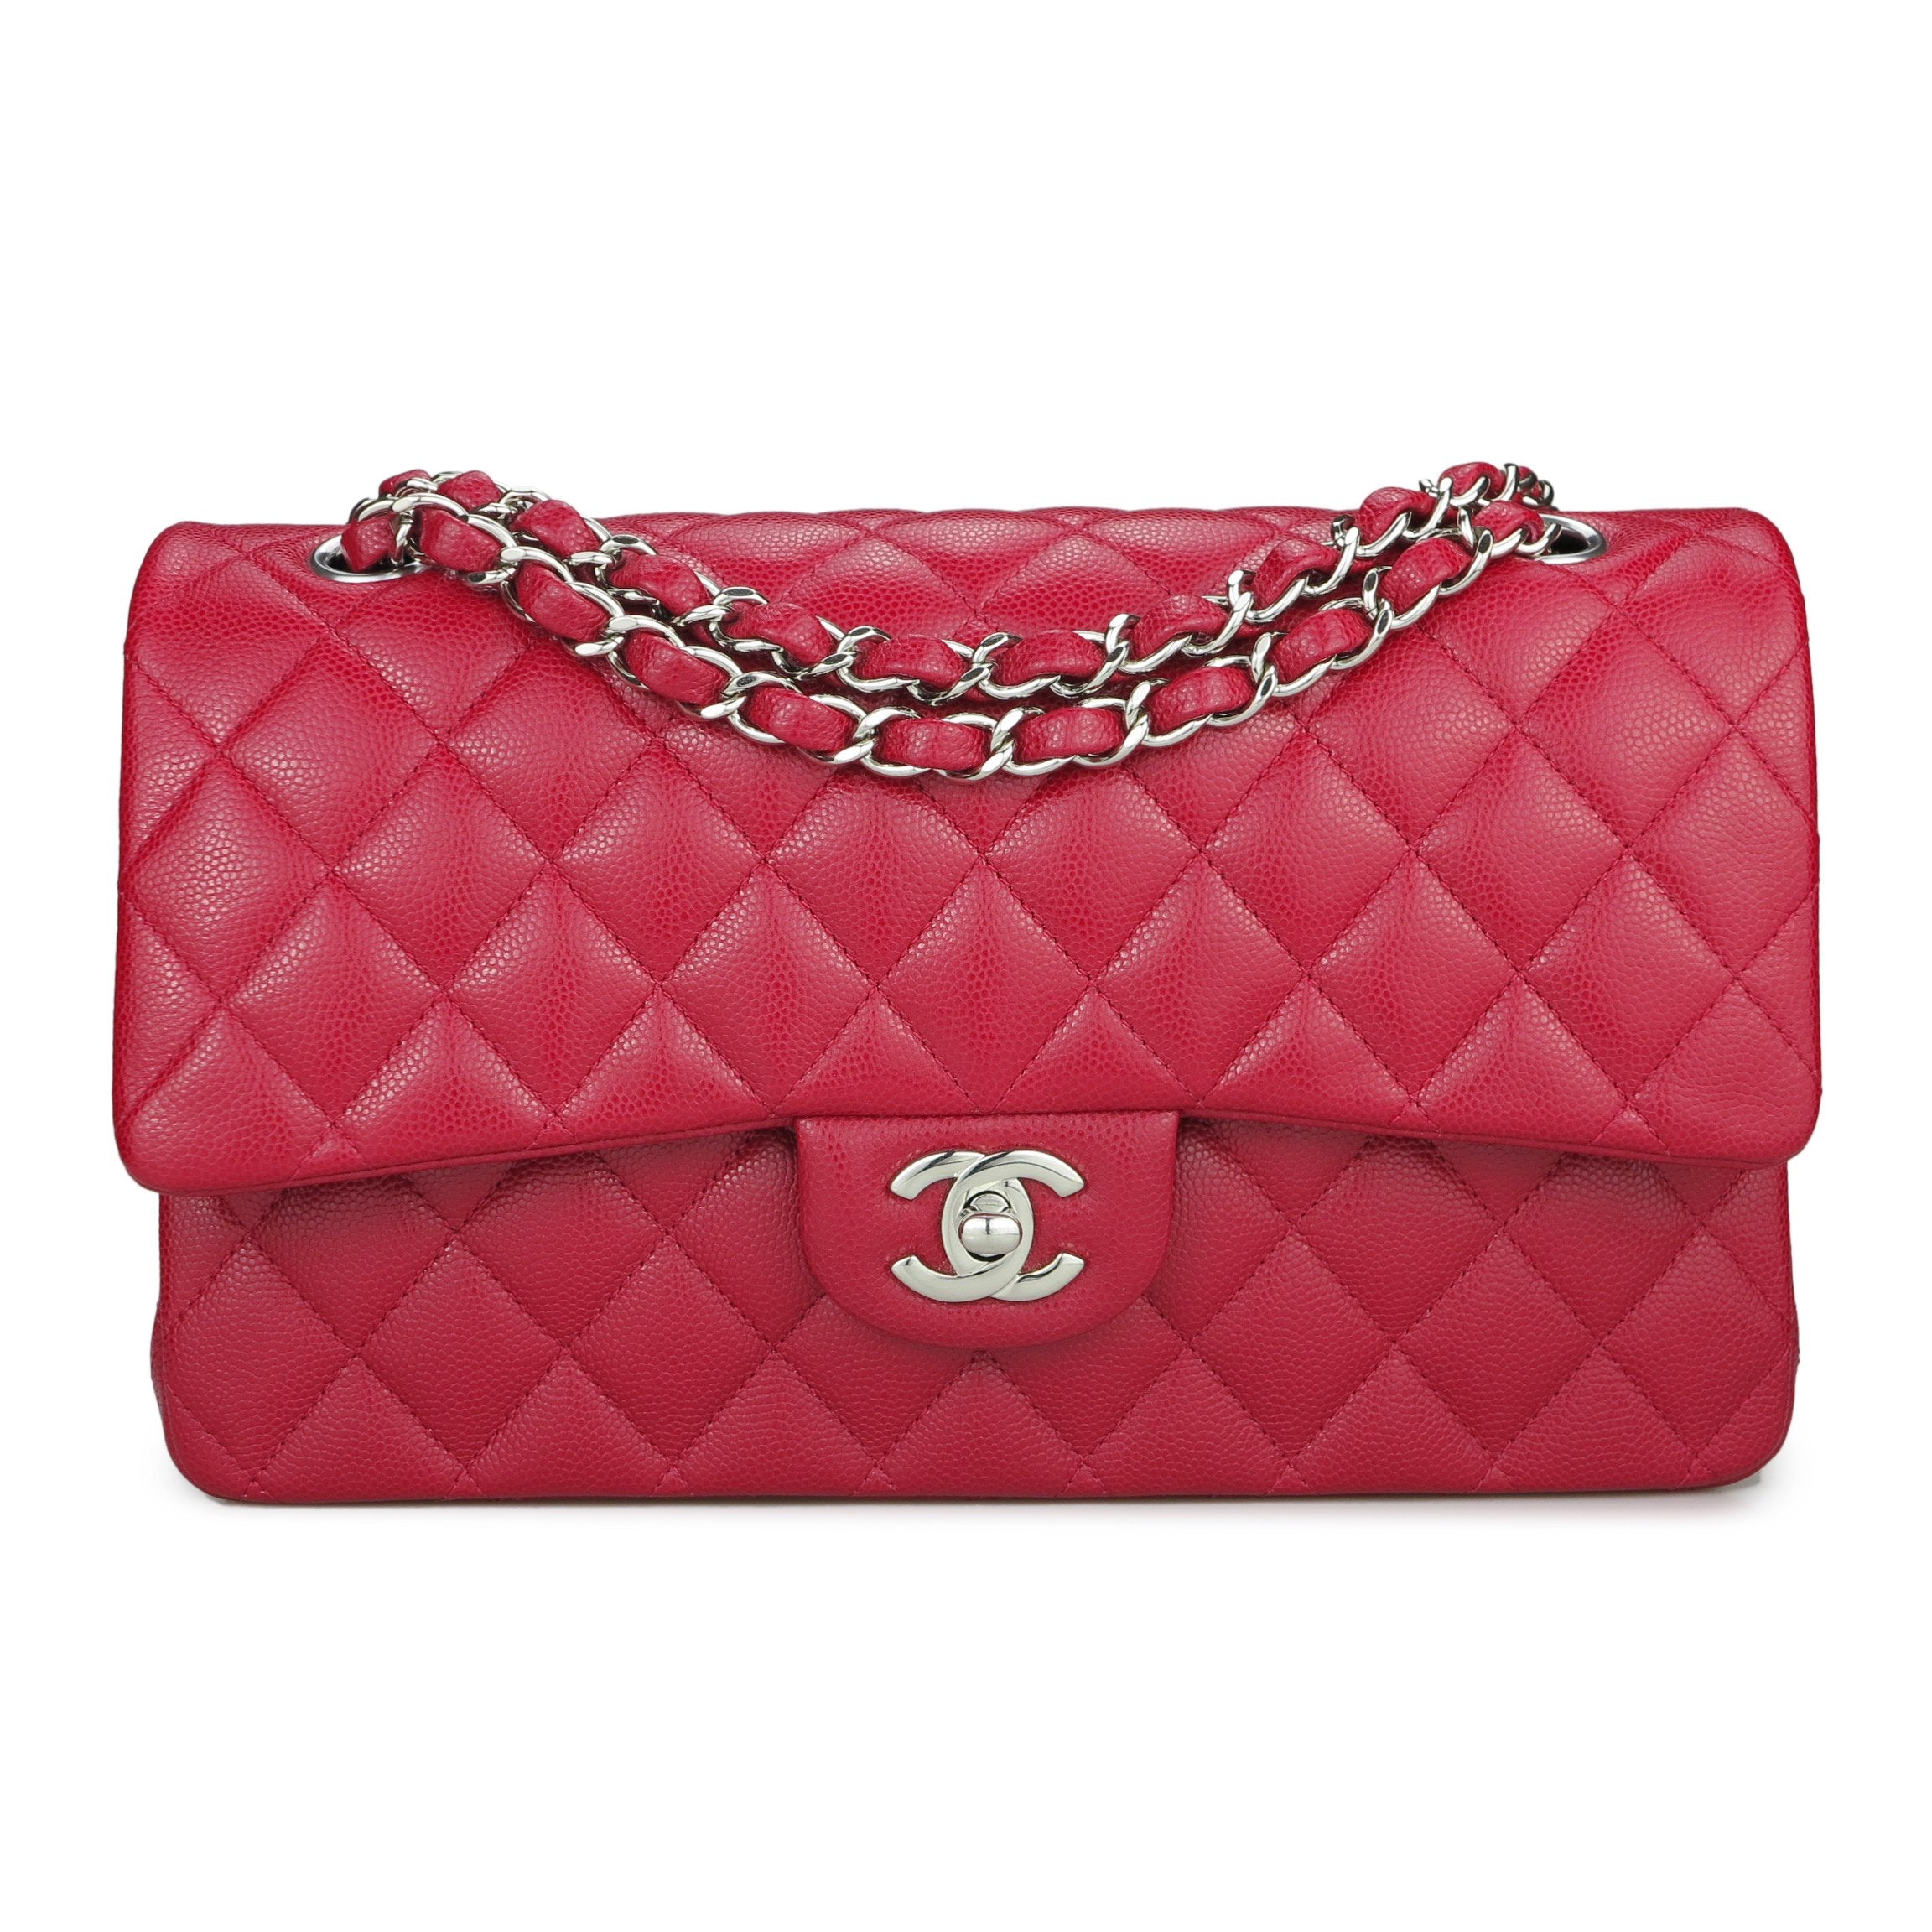 Chanel Classic M/L Medium Double Flap Sakura Pink Caviar Silver Hardwa –  Coco Approved Studio